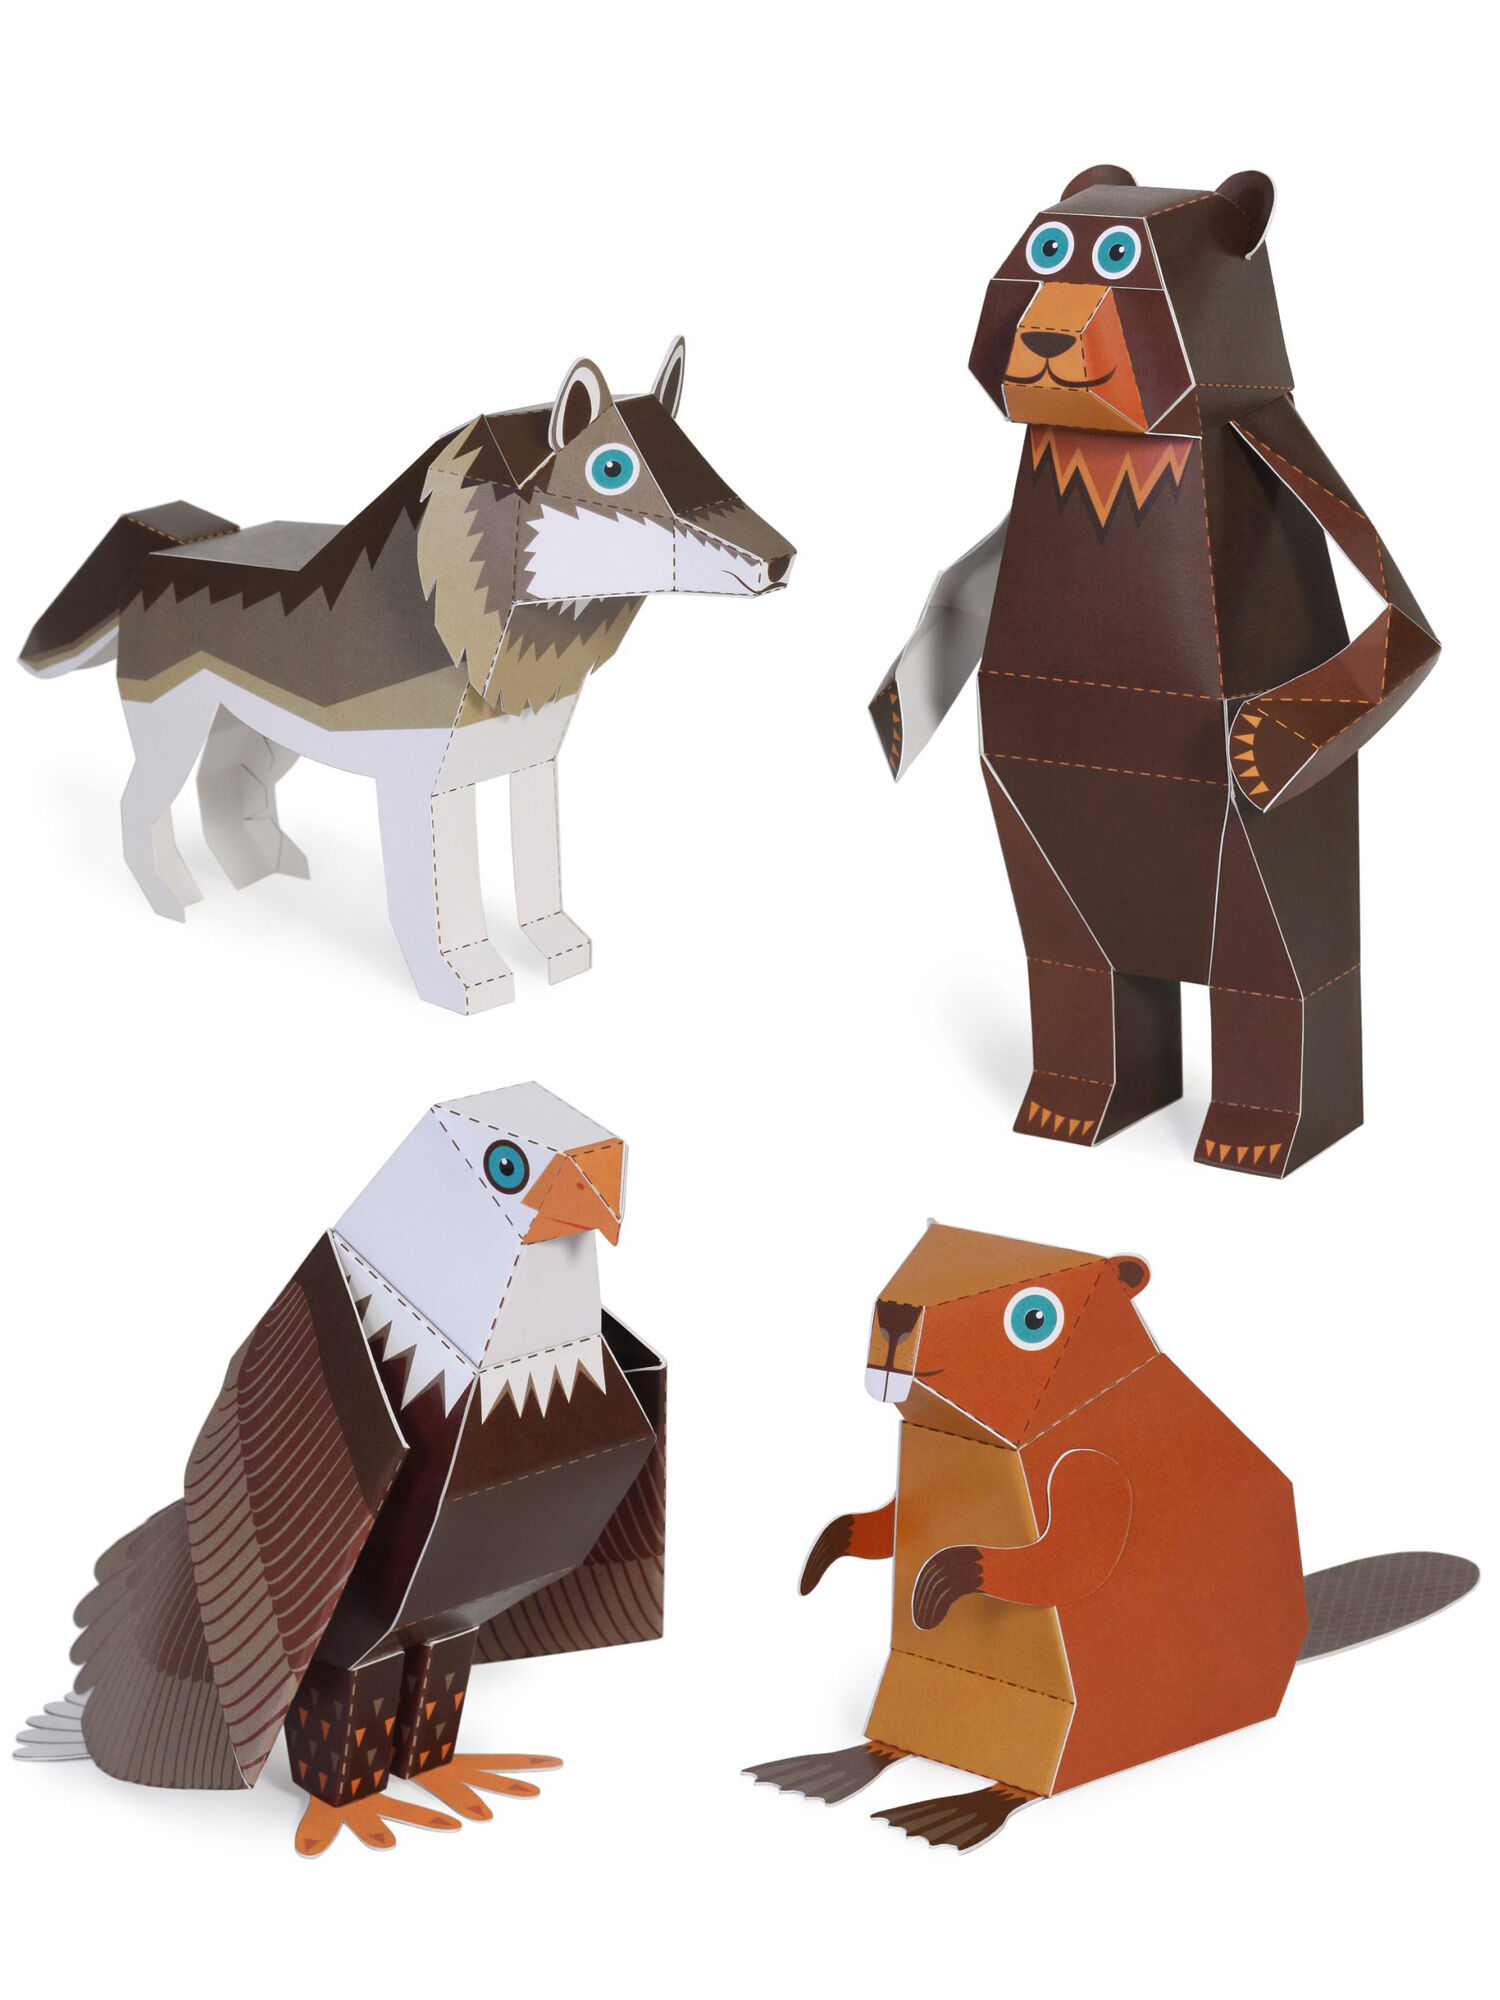 Papercraft animals